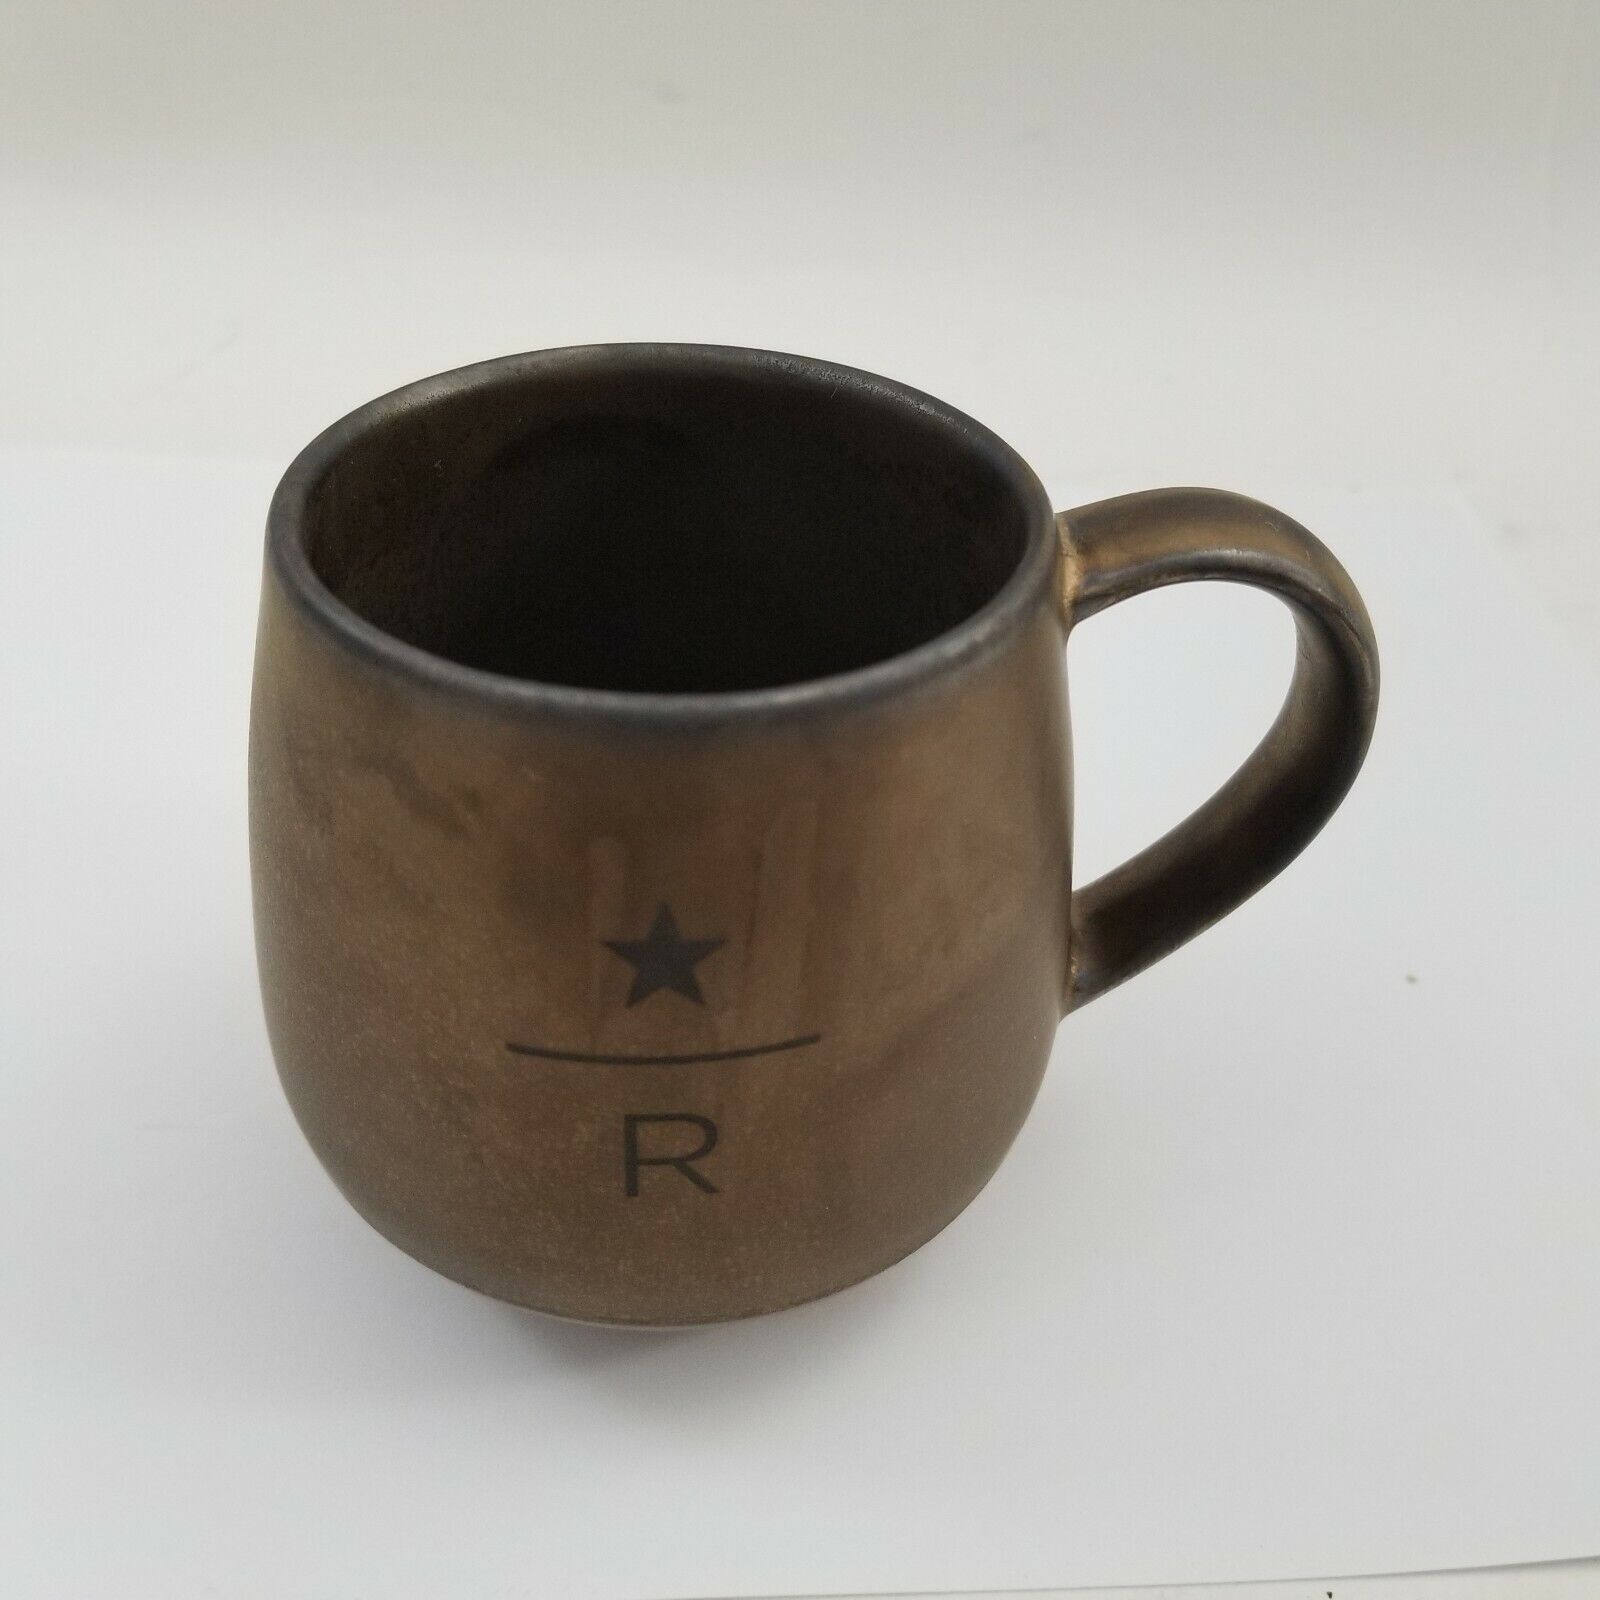 Starbucks Cup Mug Ceramic Brown Star R 2017